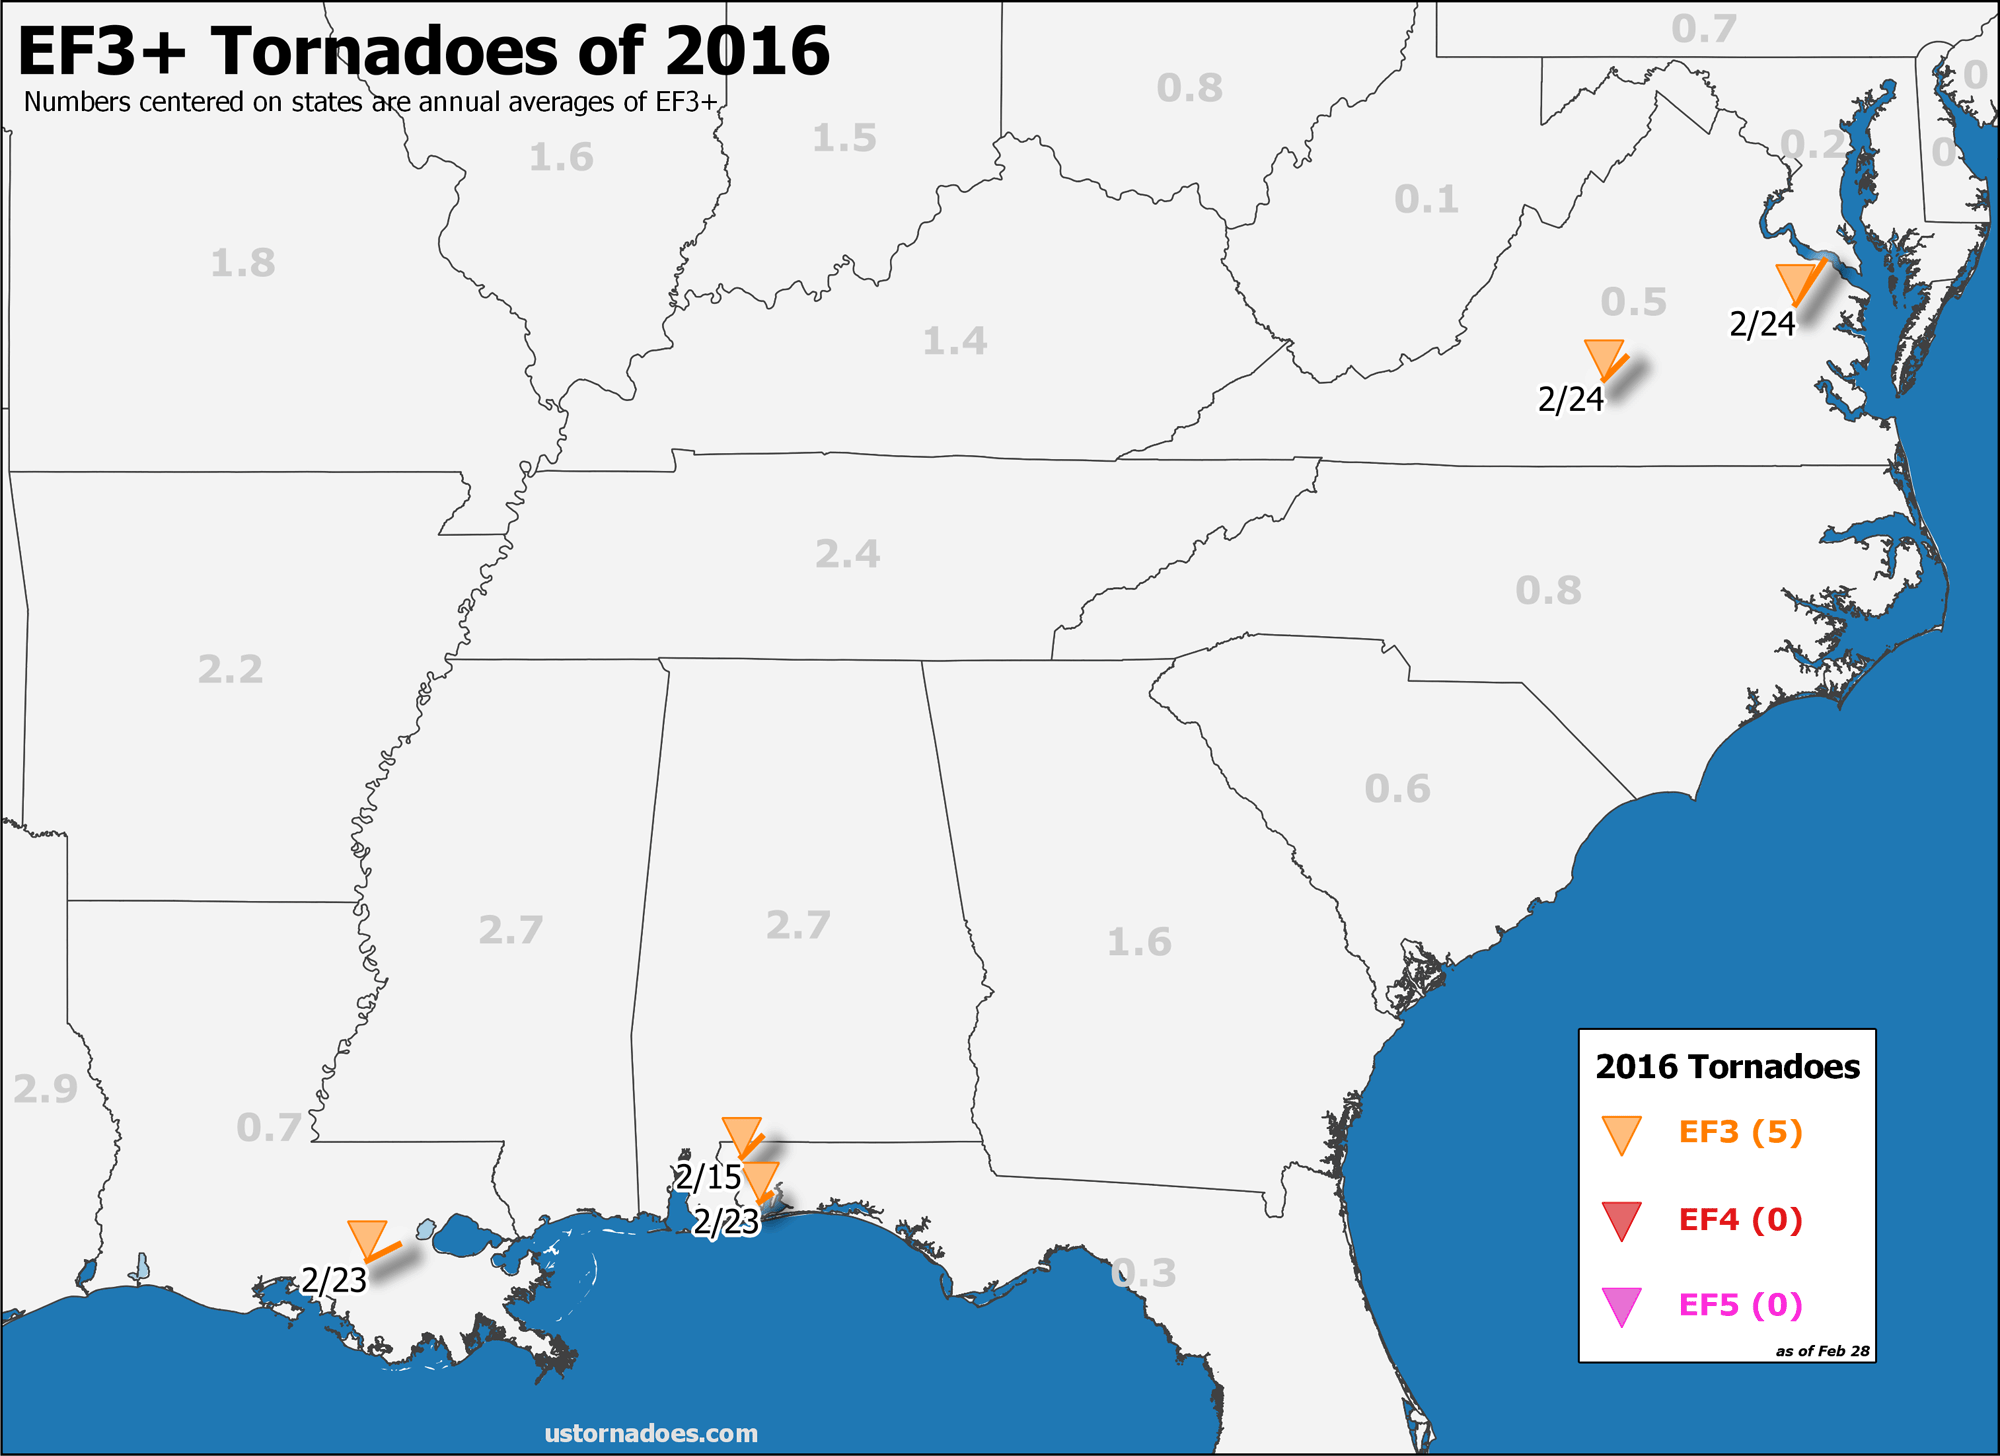 ef3-plus-tornadoes-2016-as-of-late-feb